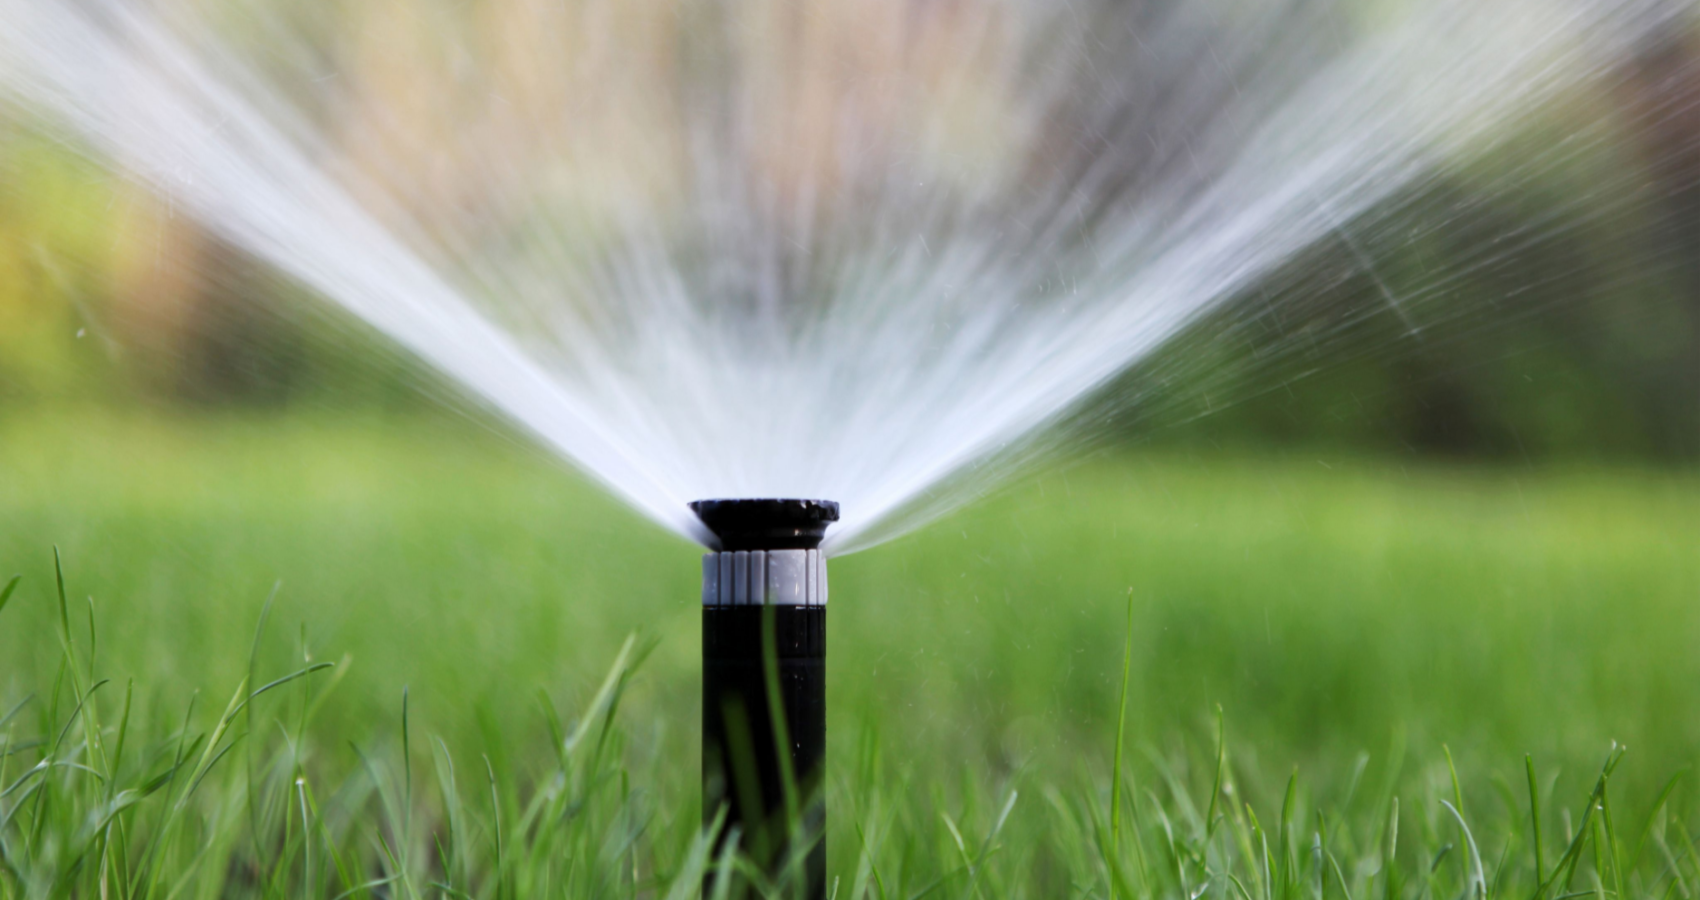 Sprinkler System Installation Twin Oaks, MO | Lawn Care for Twin Oaks, MO Area | Lawn Sprinklers of St. Louis